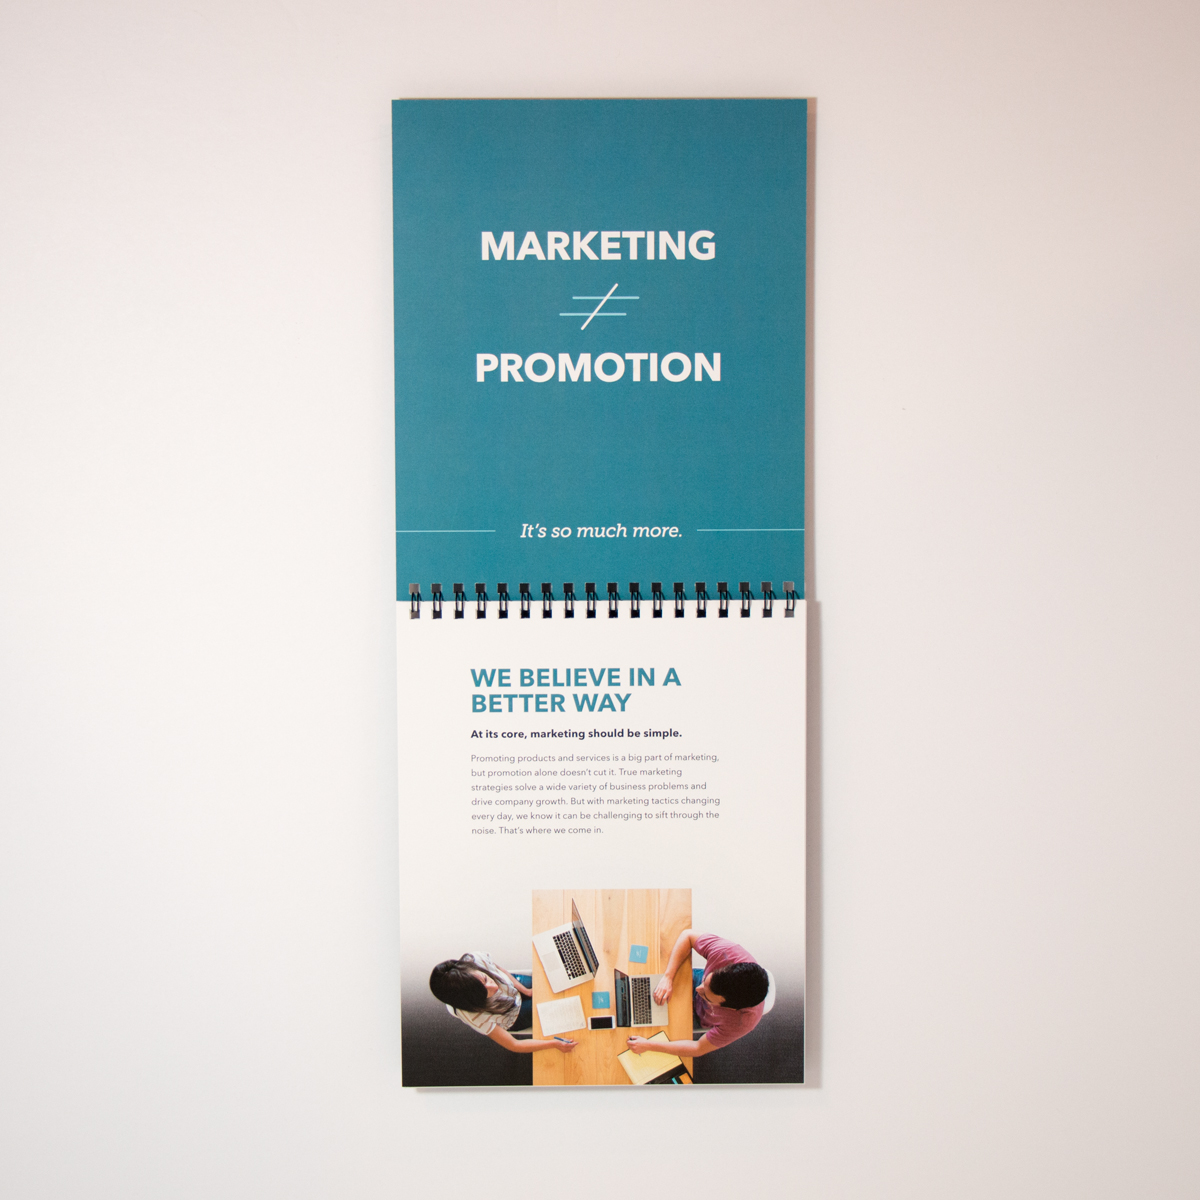 Simple Strat Marketing Booklet